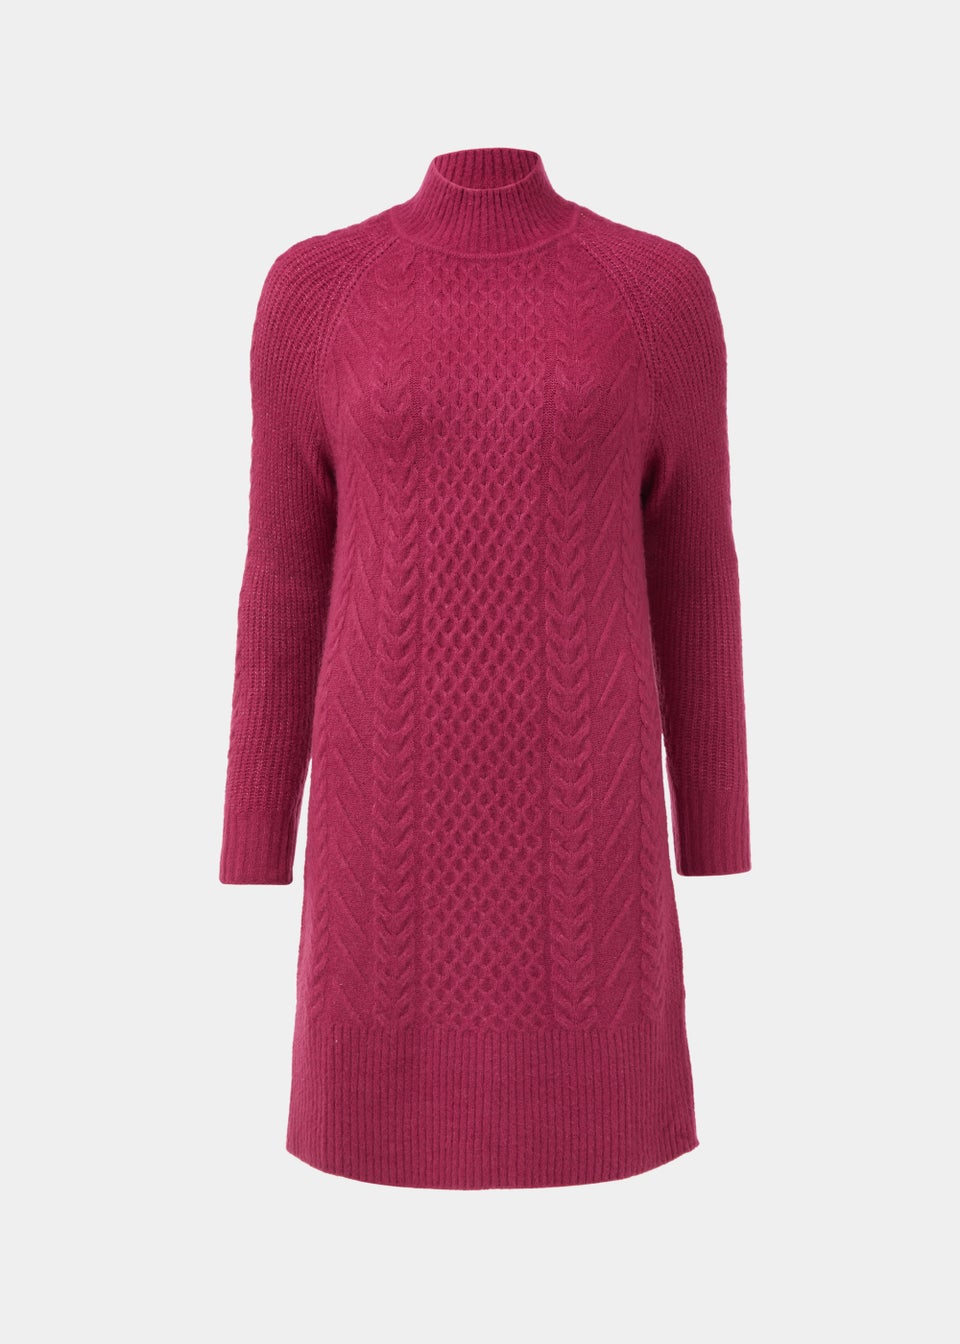 Berry Cable Knit Jumper Dress - Matalan